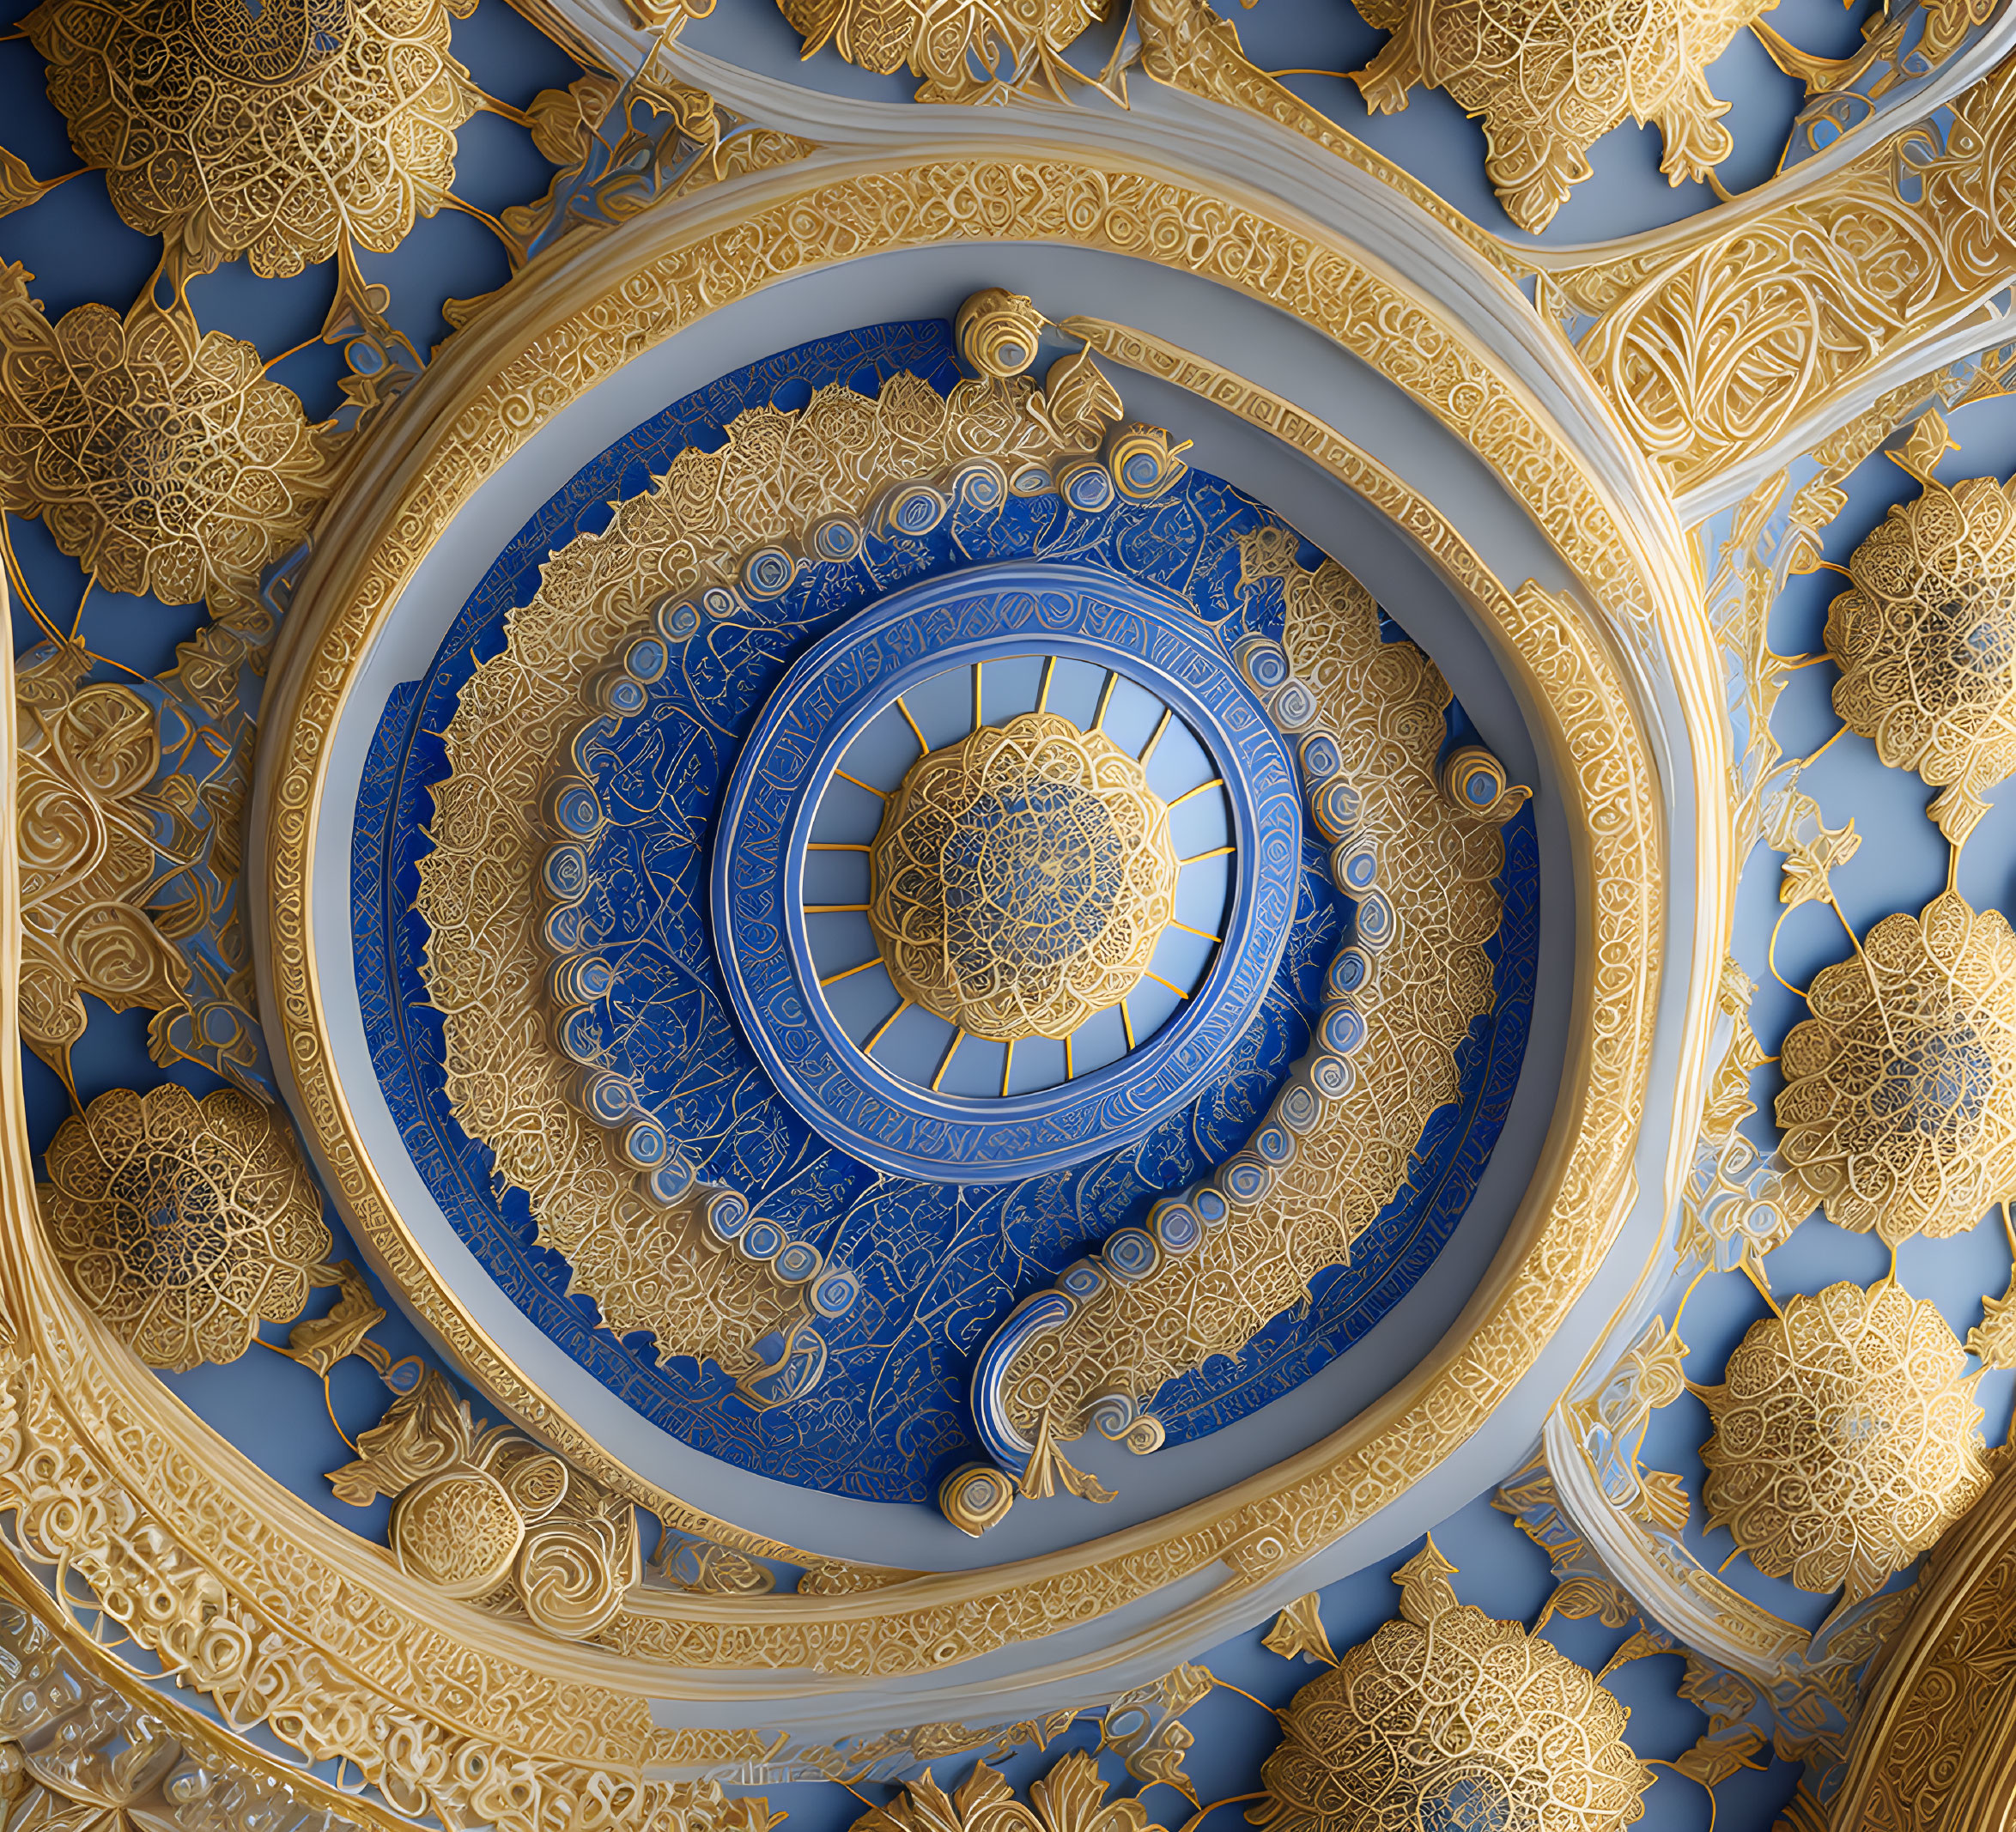  ornate ceiling